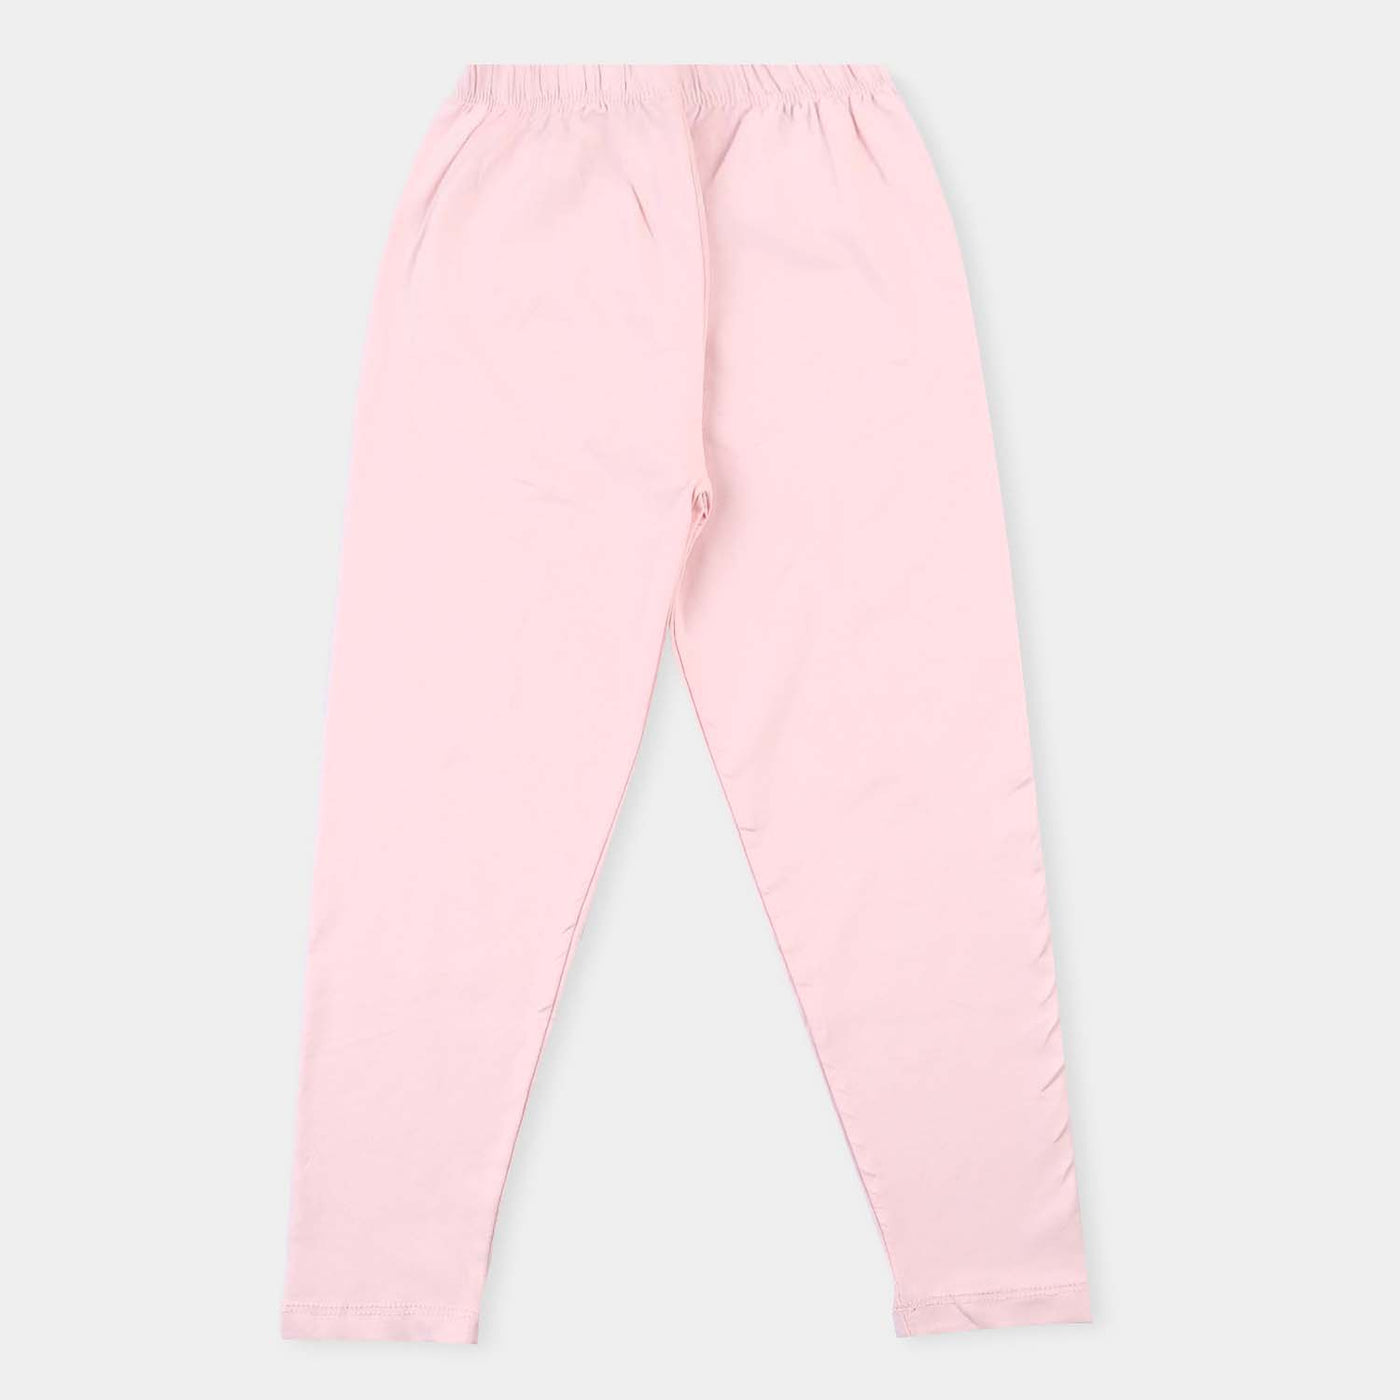 Girls Lycra Jersey Tights Basic- L.Pink